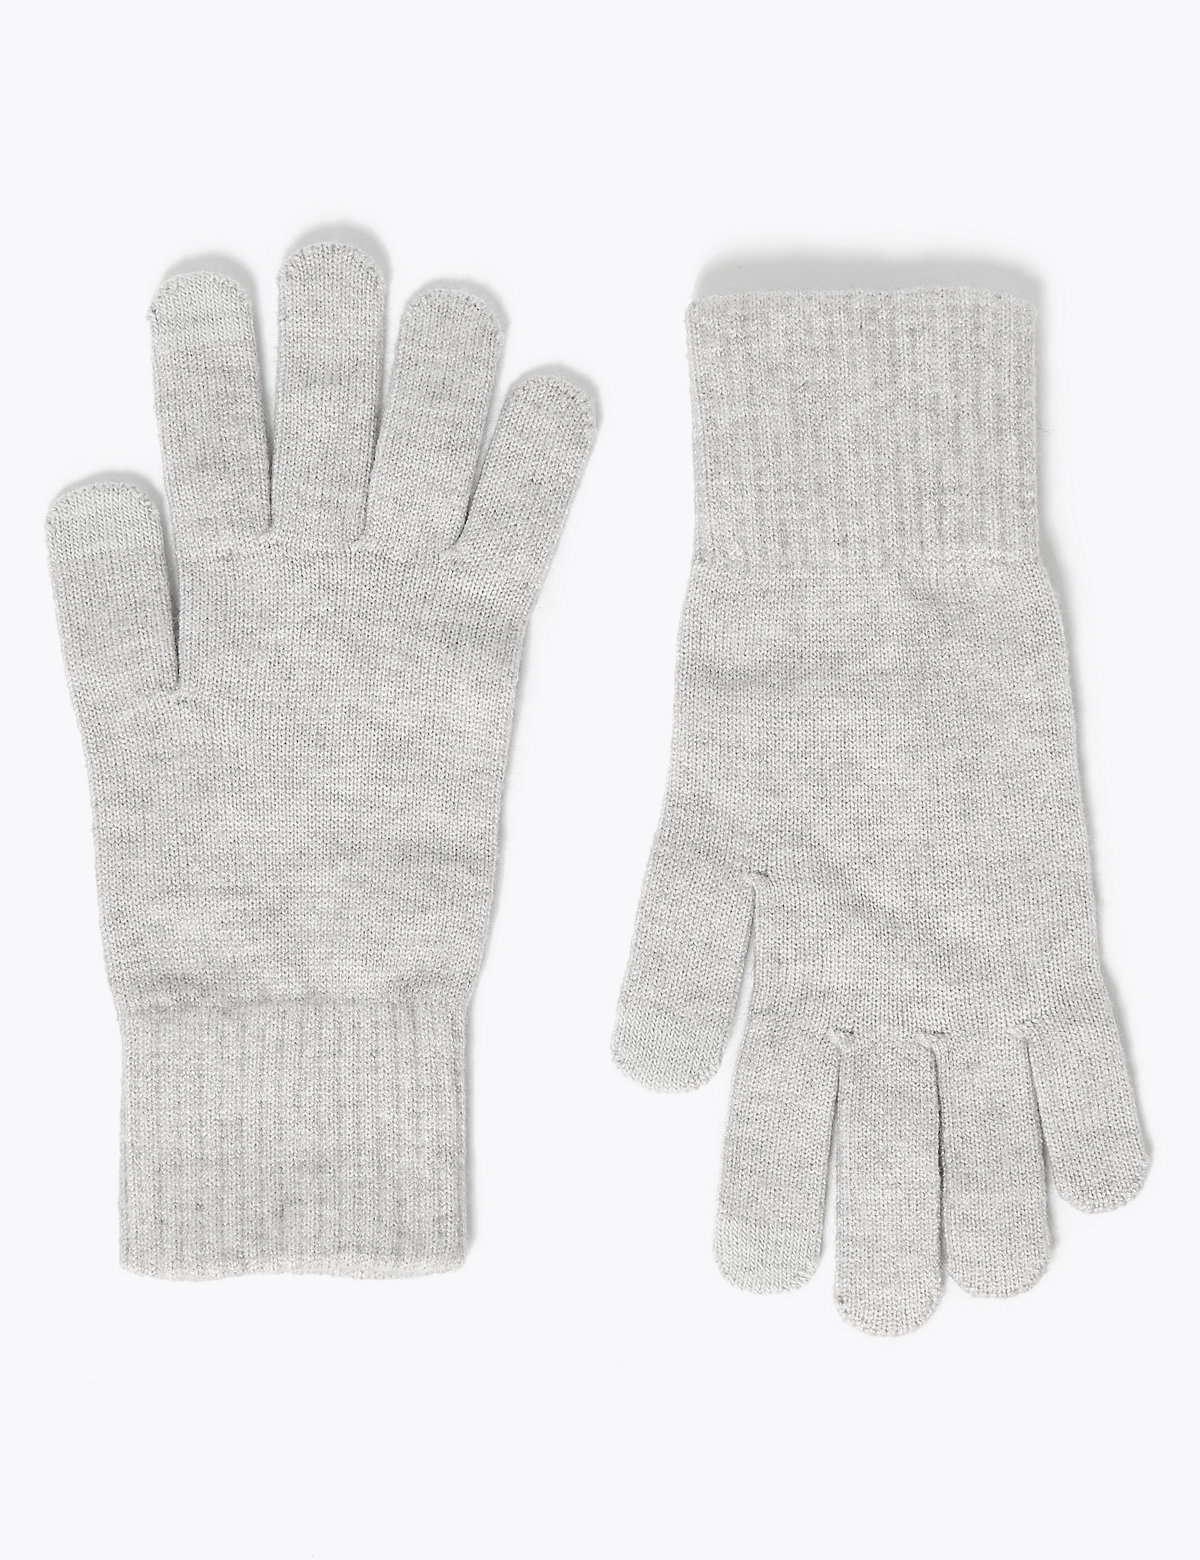 Super Soft Knitted Gloves